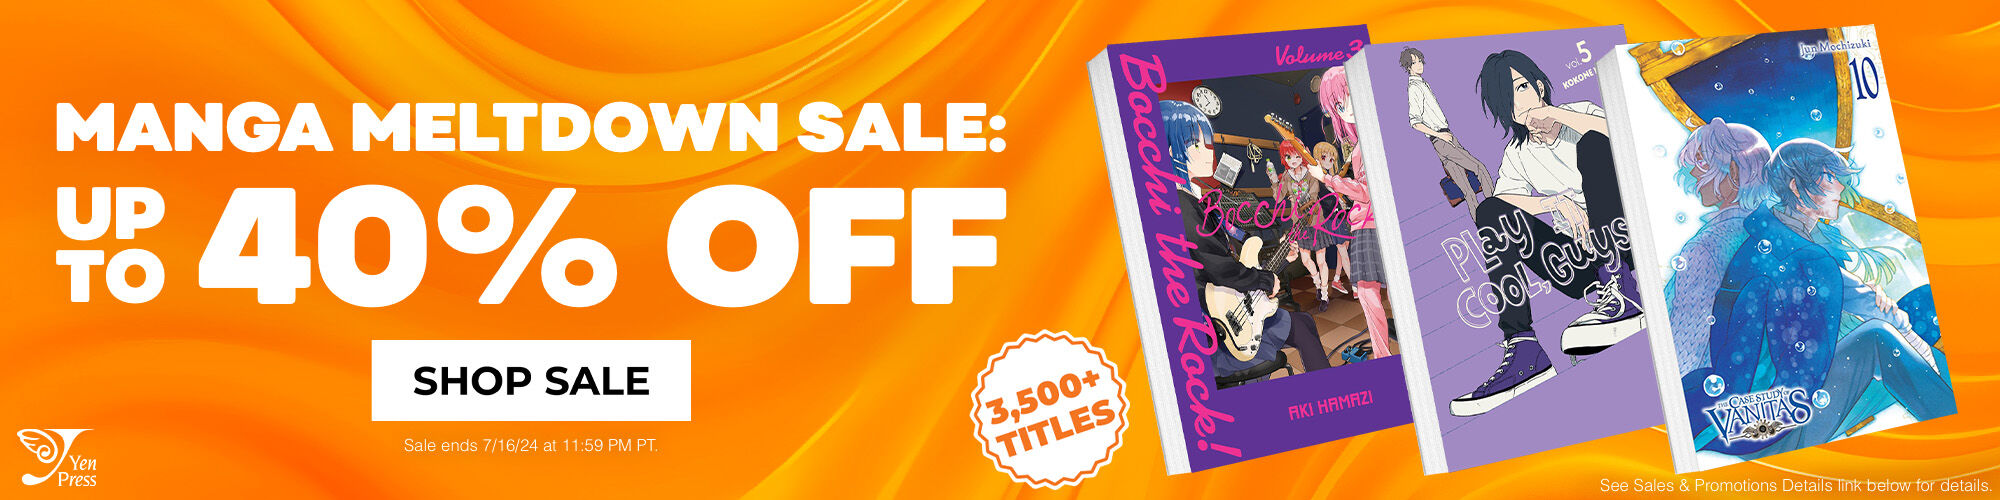  Crunchyroll Yen Press Sale